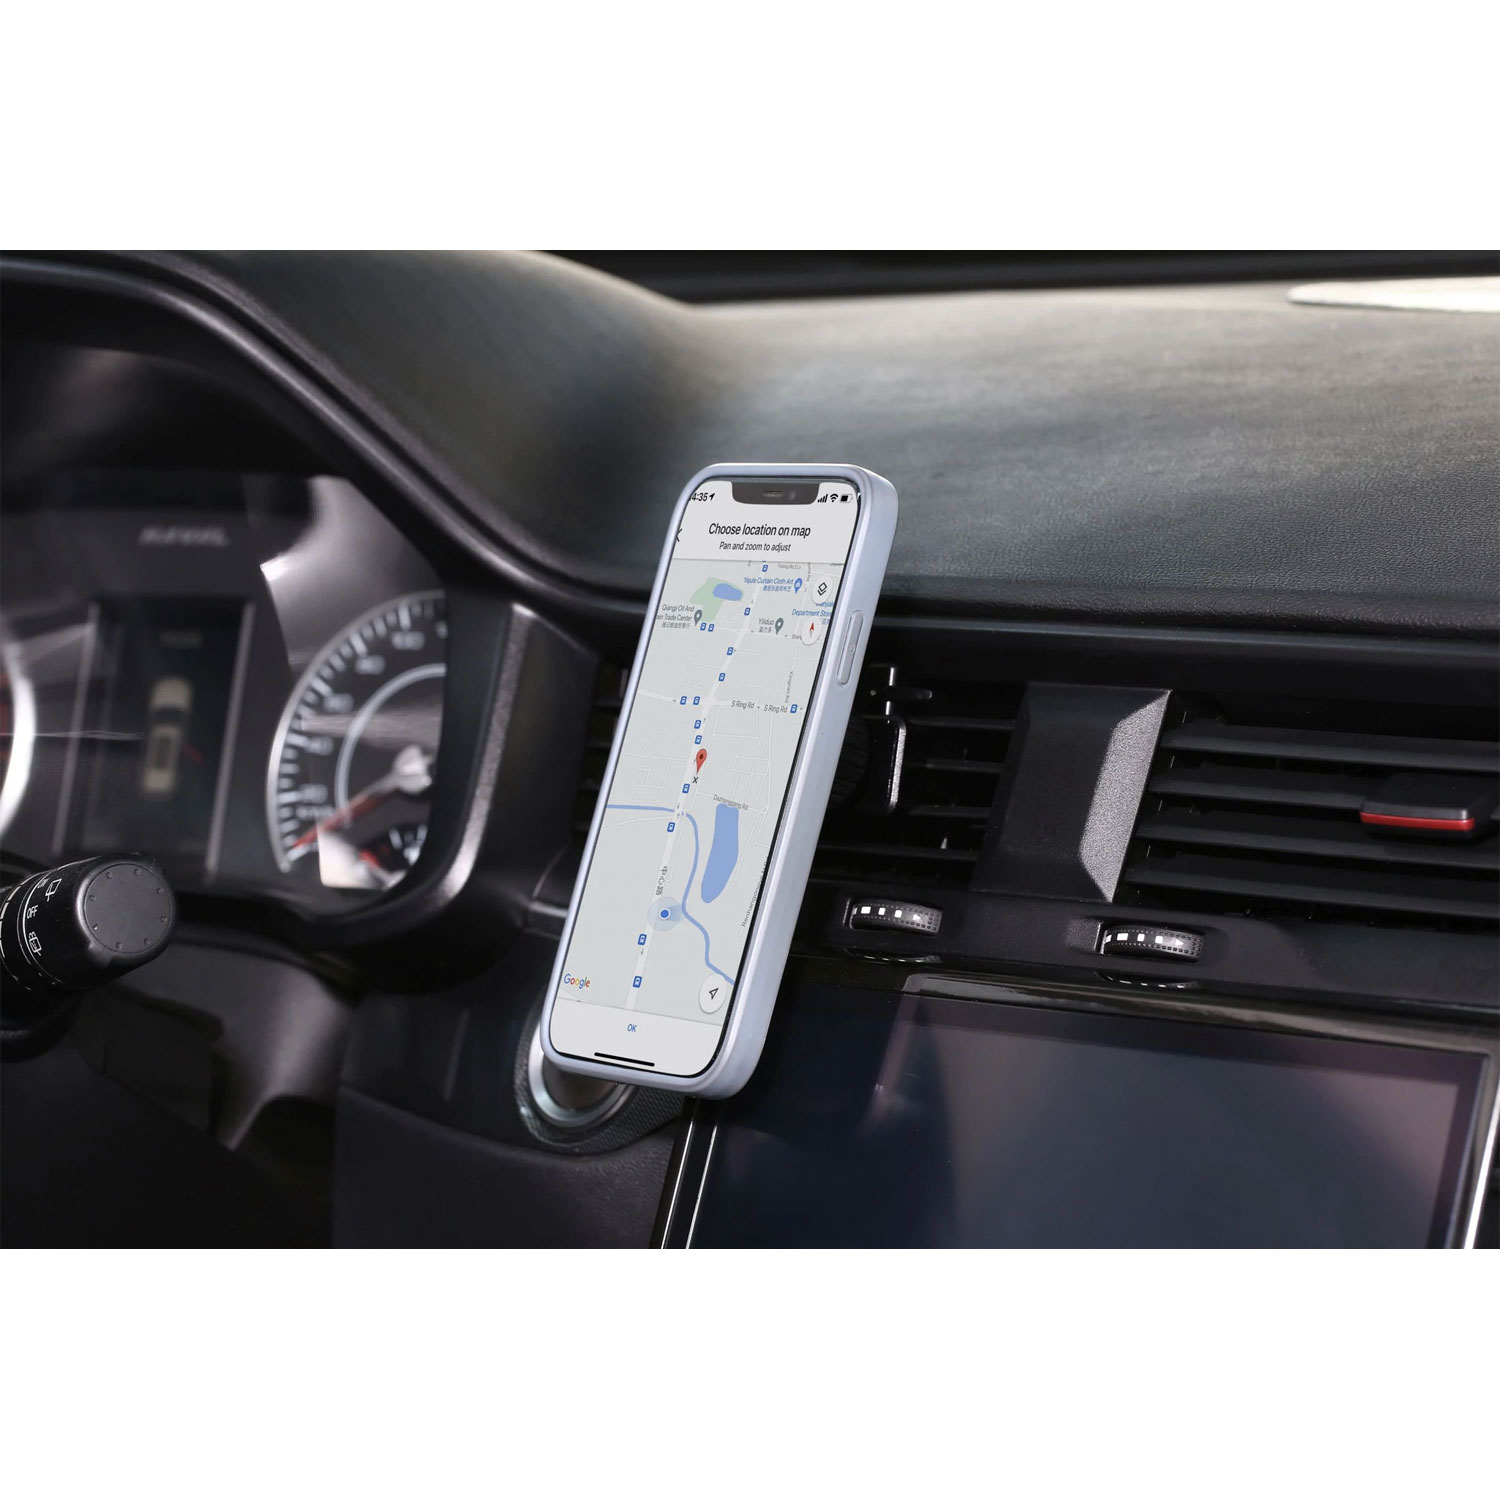 DGN Universal Magnetic Car Air Vent Mount For Smartphones